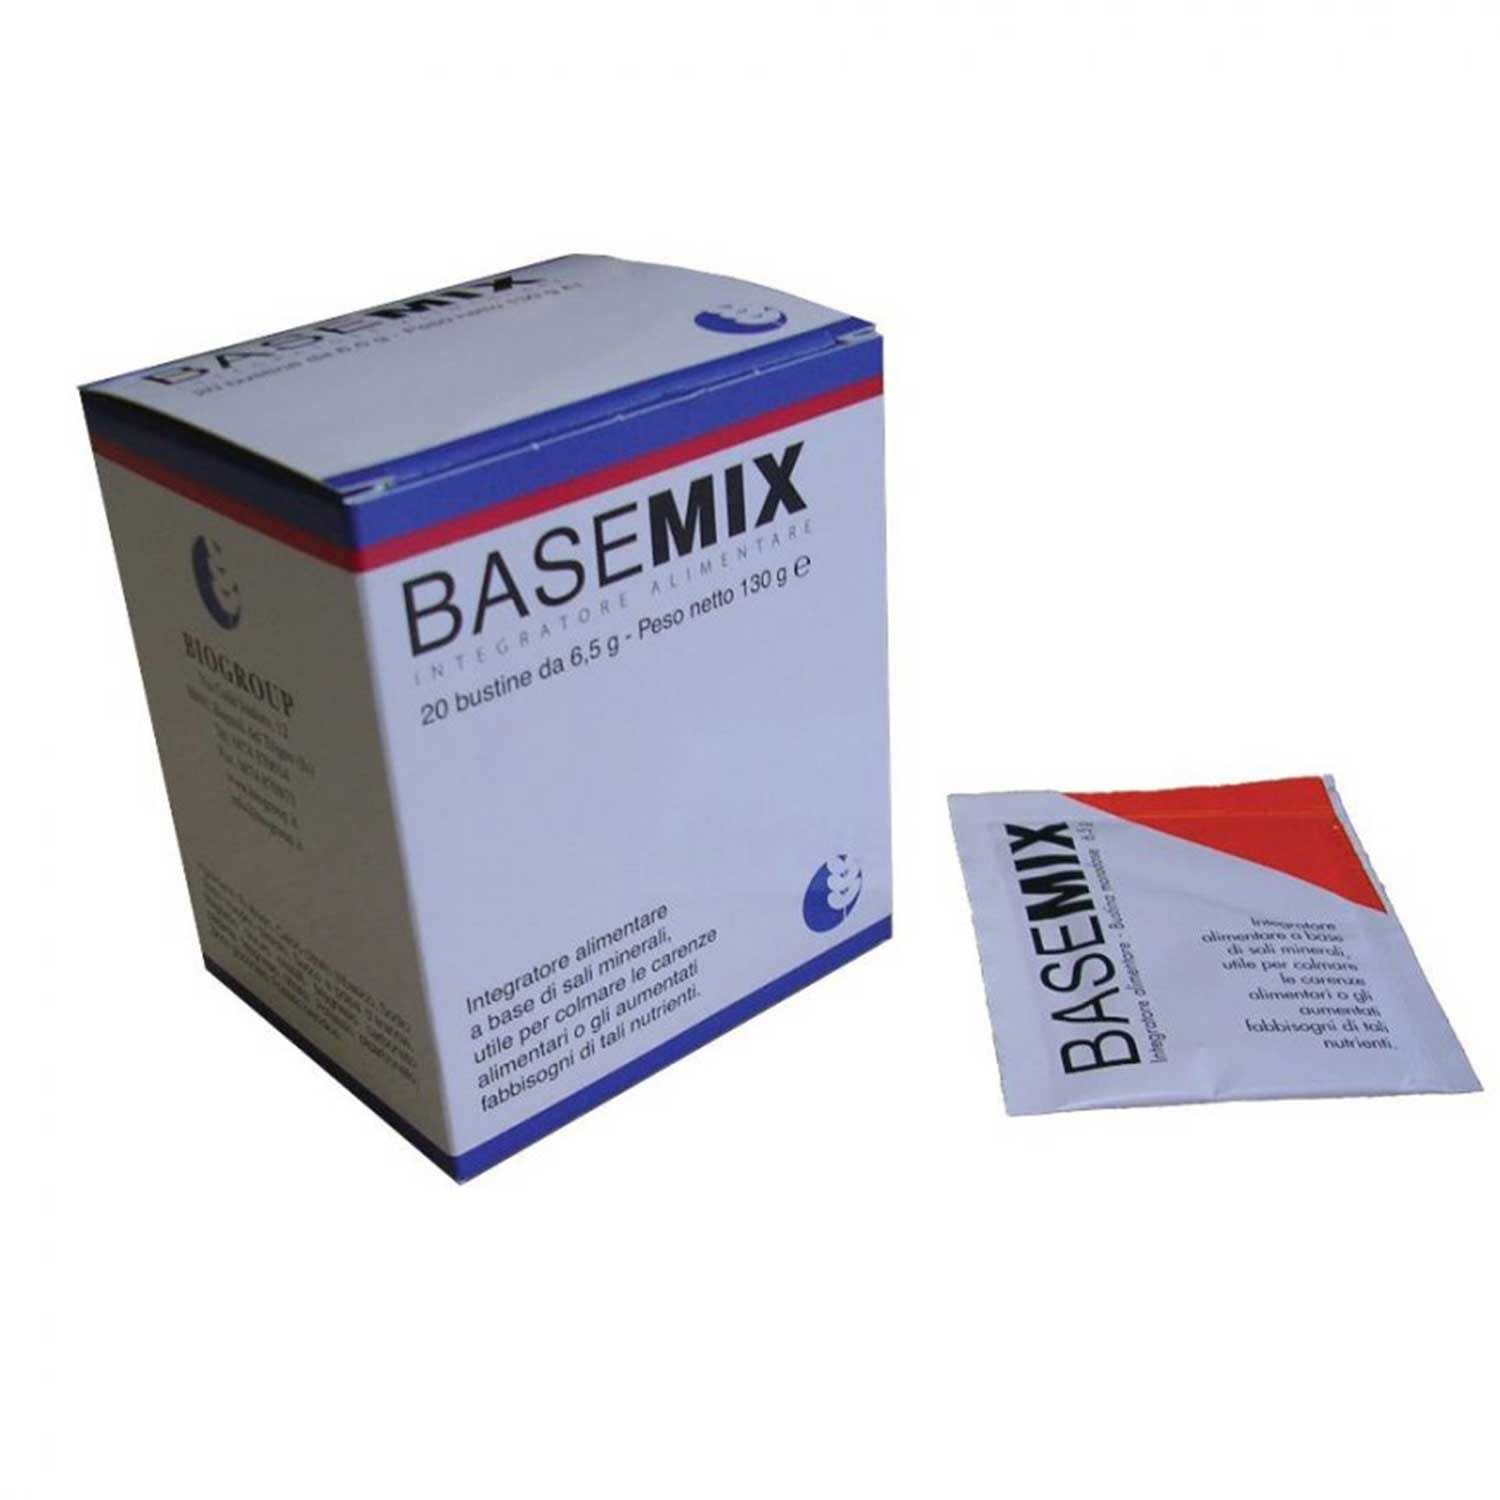 903035095 - Basemix Integratore sali minerali 20 bustine - 7876564_2.jpg